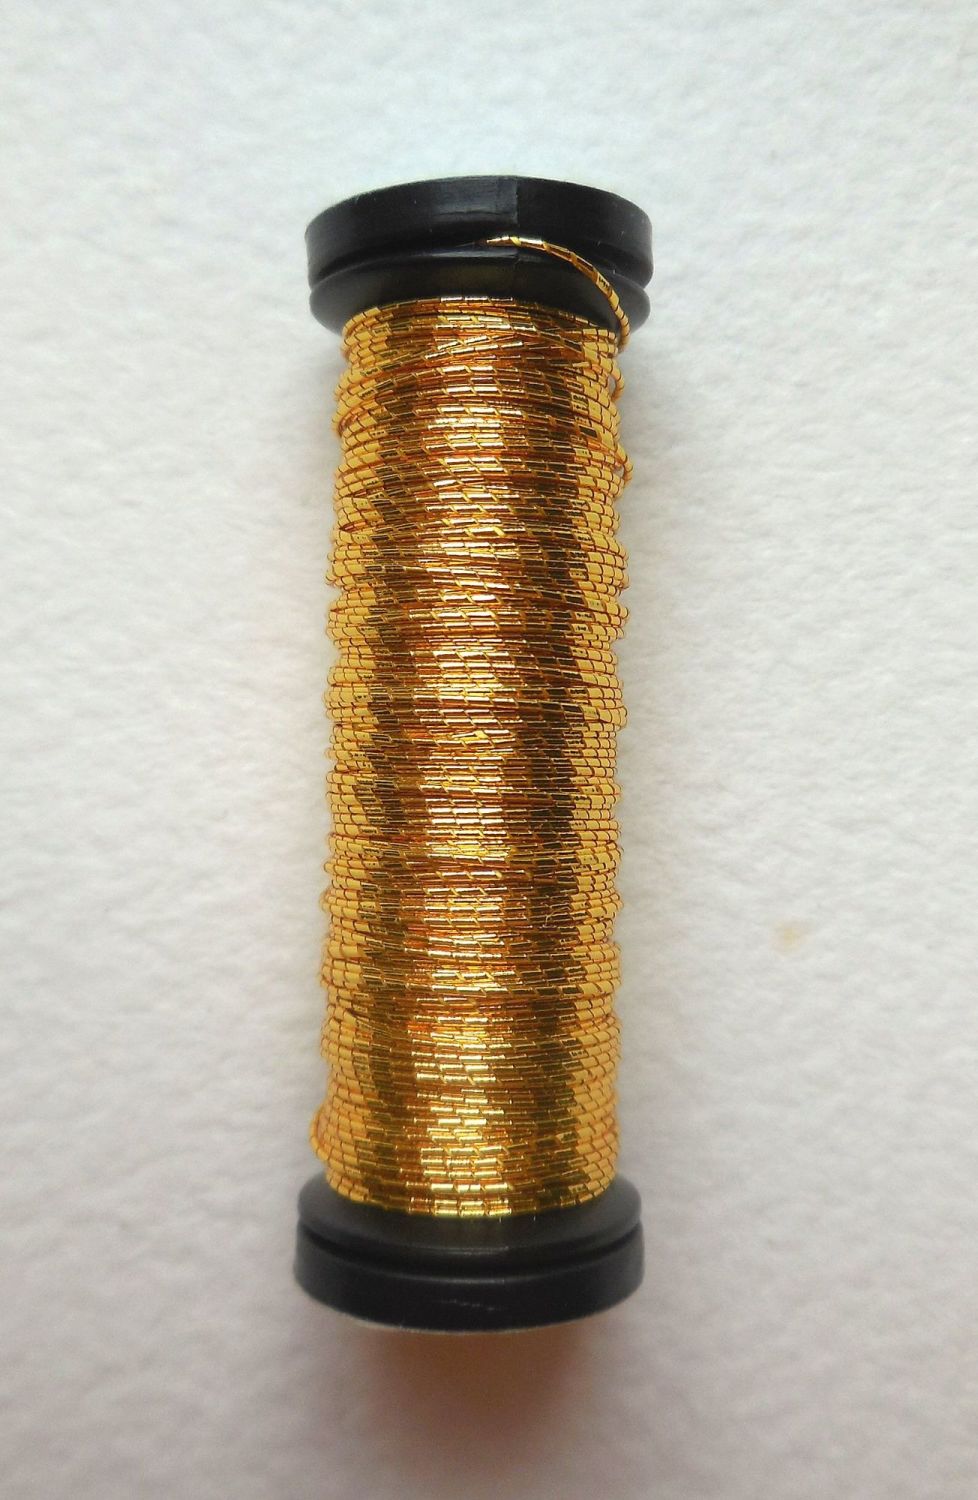 Japan thread, Kreinik #7, gold colour - 10m reel